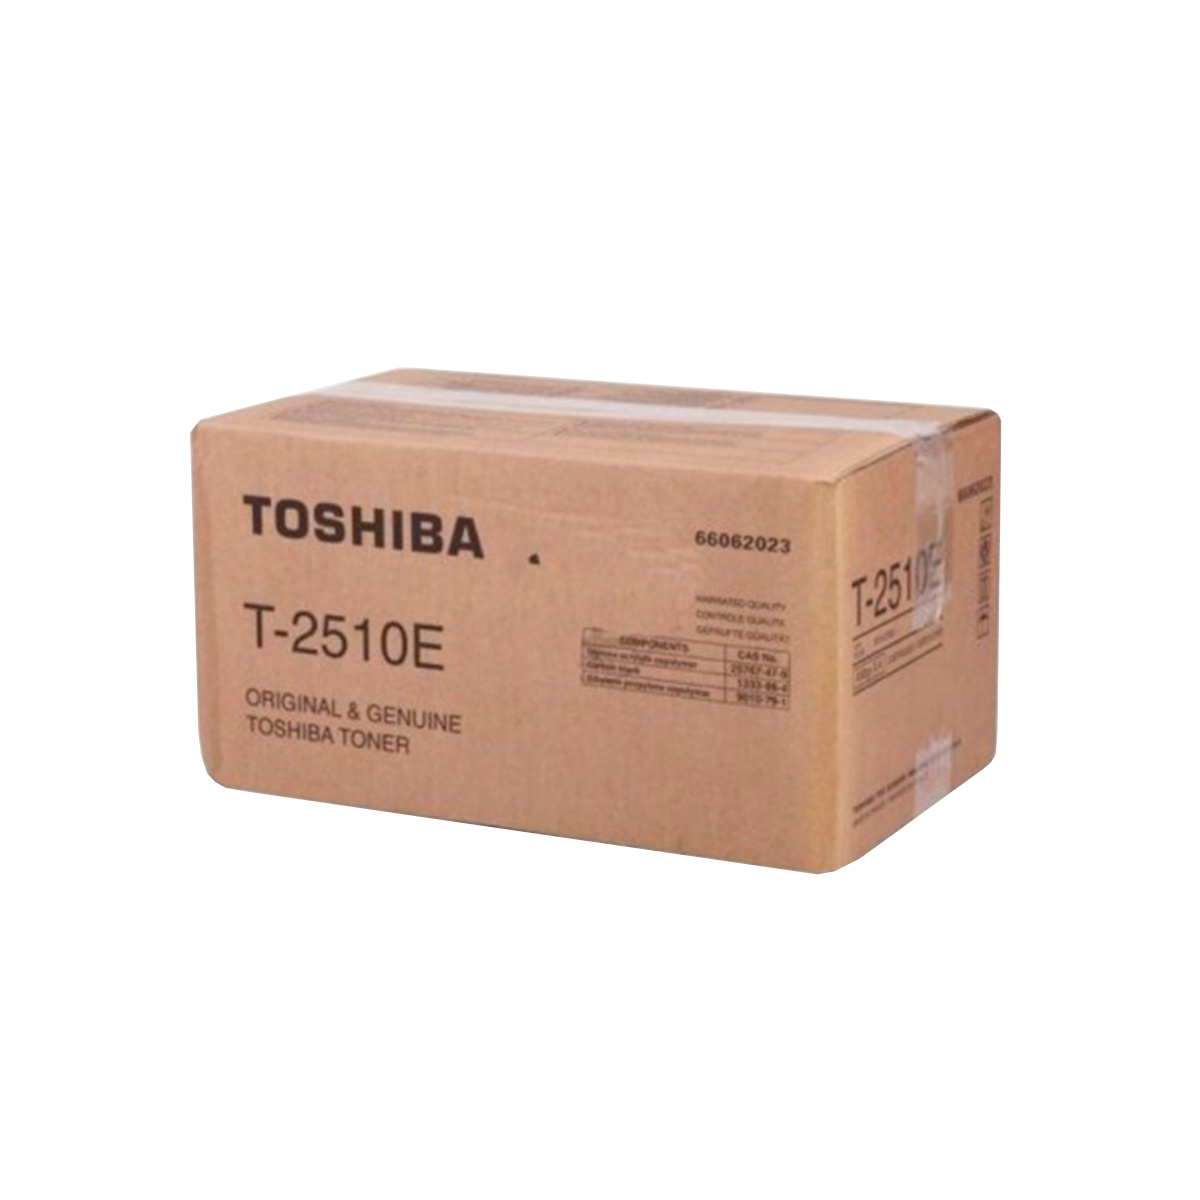 TOSHIBA TONER 66062023  T2510E